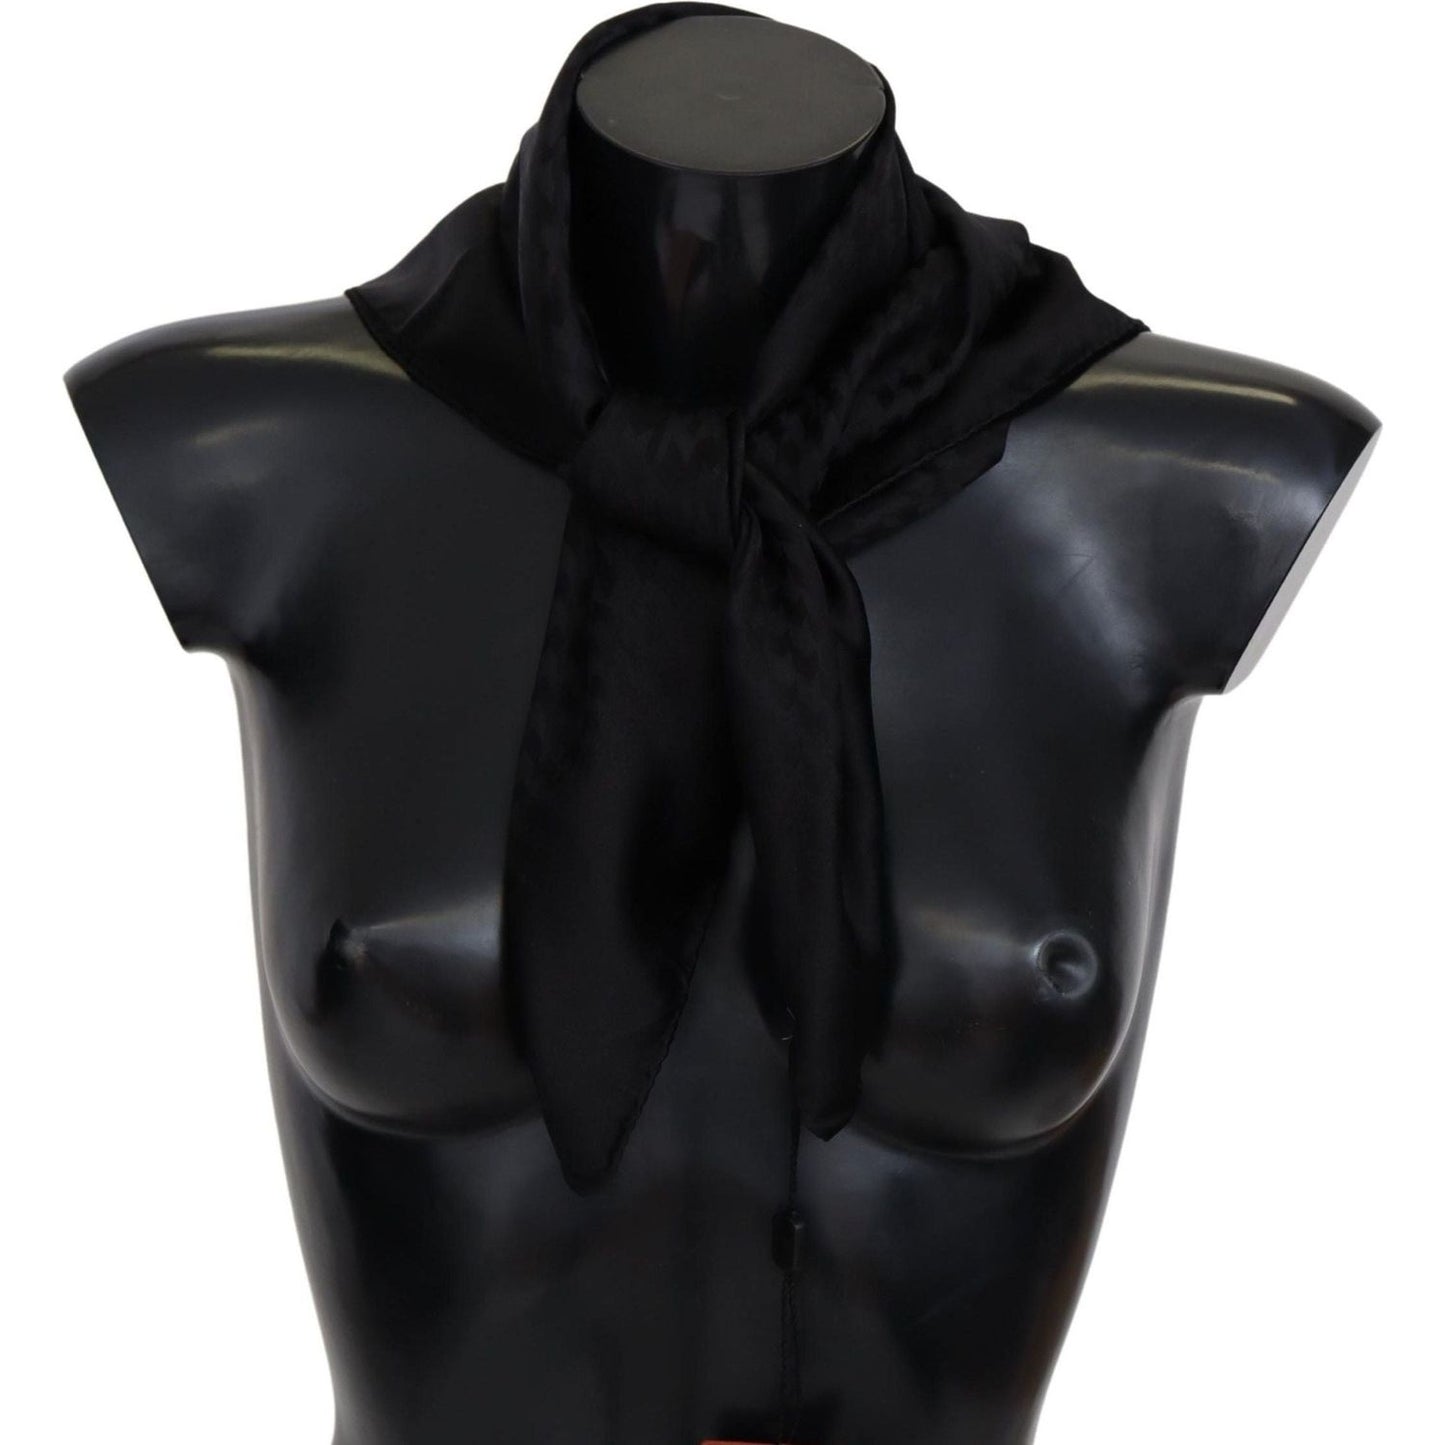 Missoni | Black Wool Knit Unisex Neck Wrap Shawl Scarf | 169.00 - McRichard Designer Brands